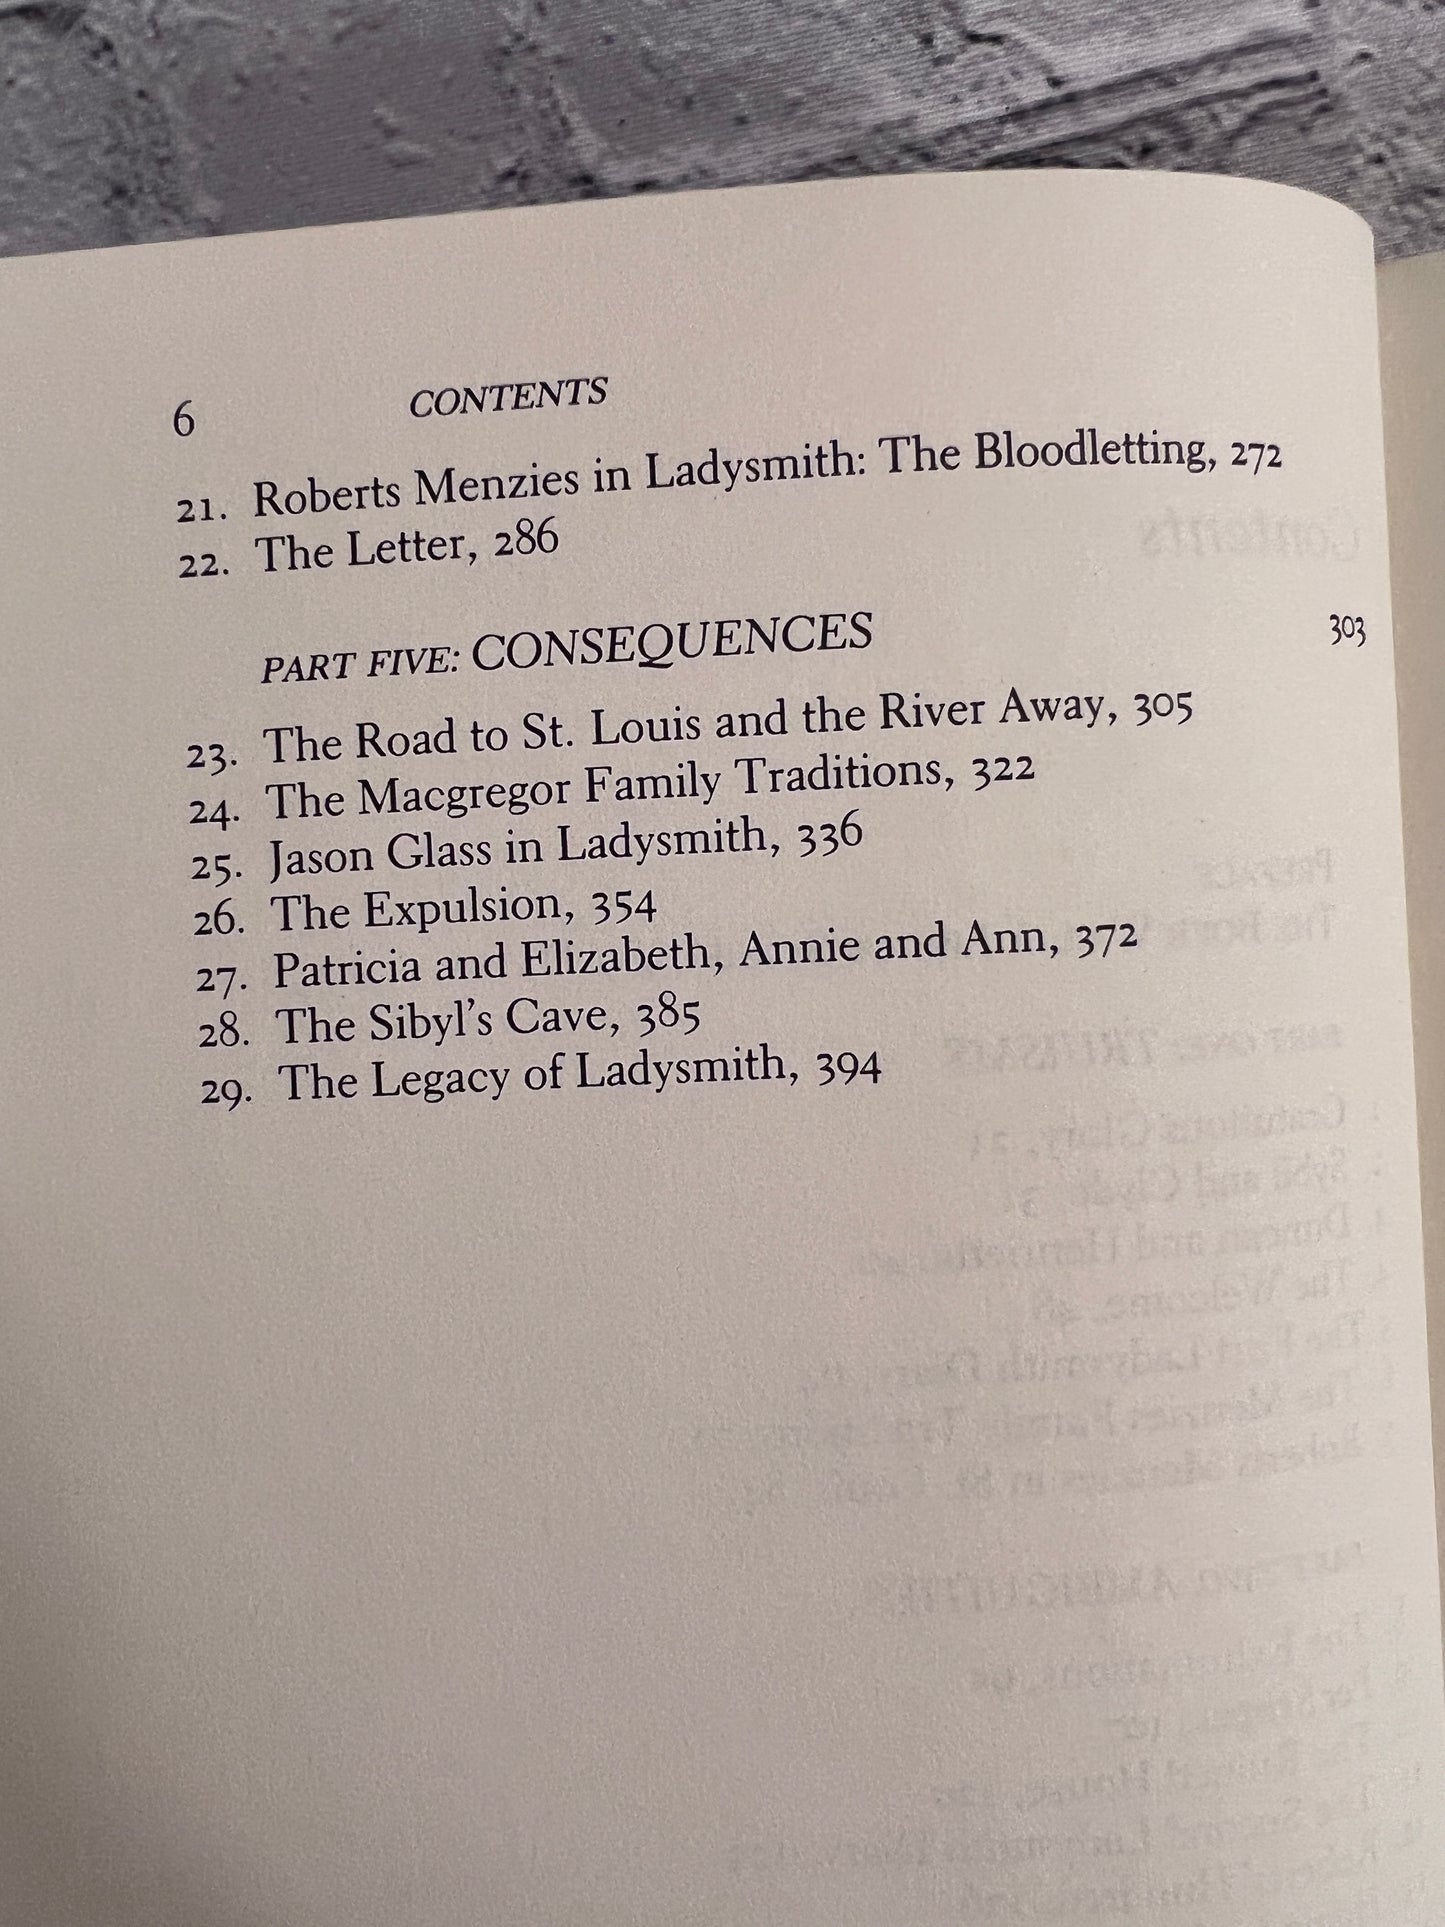 The Legacy of Ladysmith by John Kenny Crane [1986]